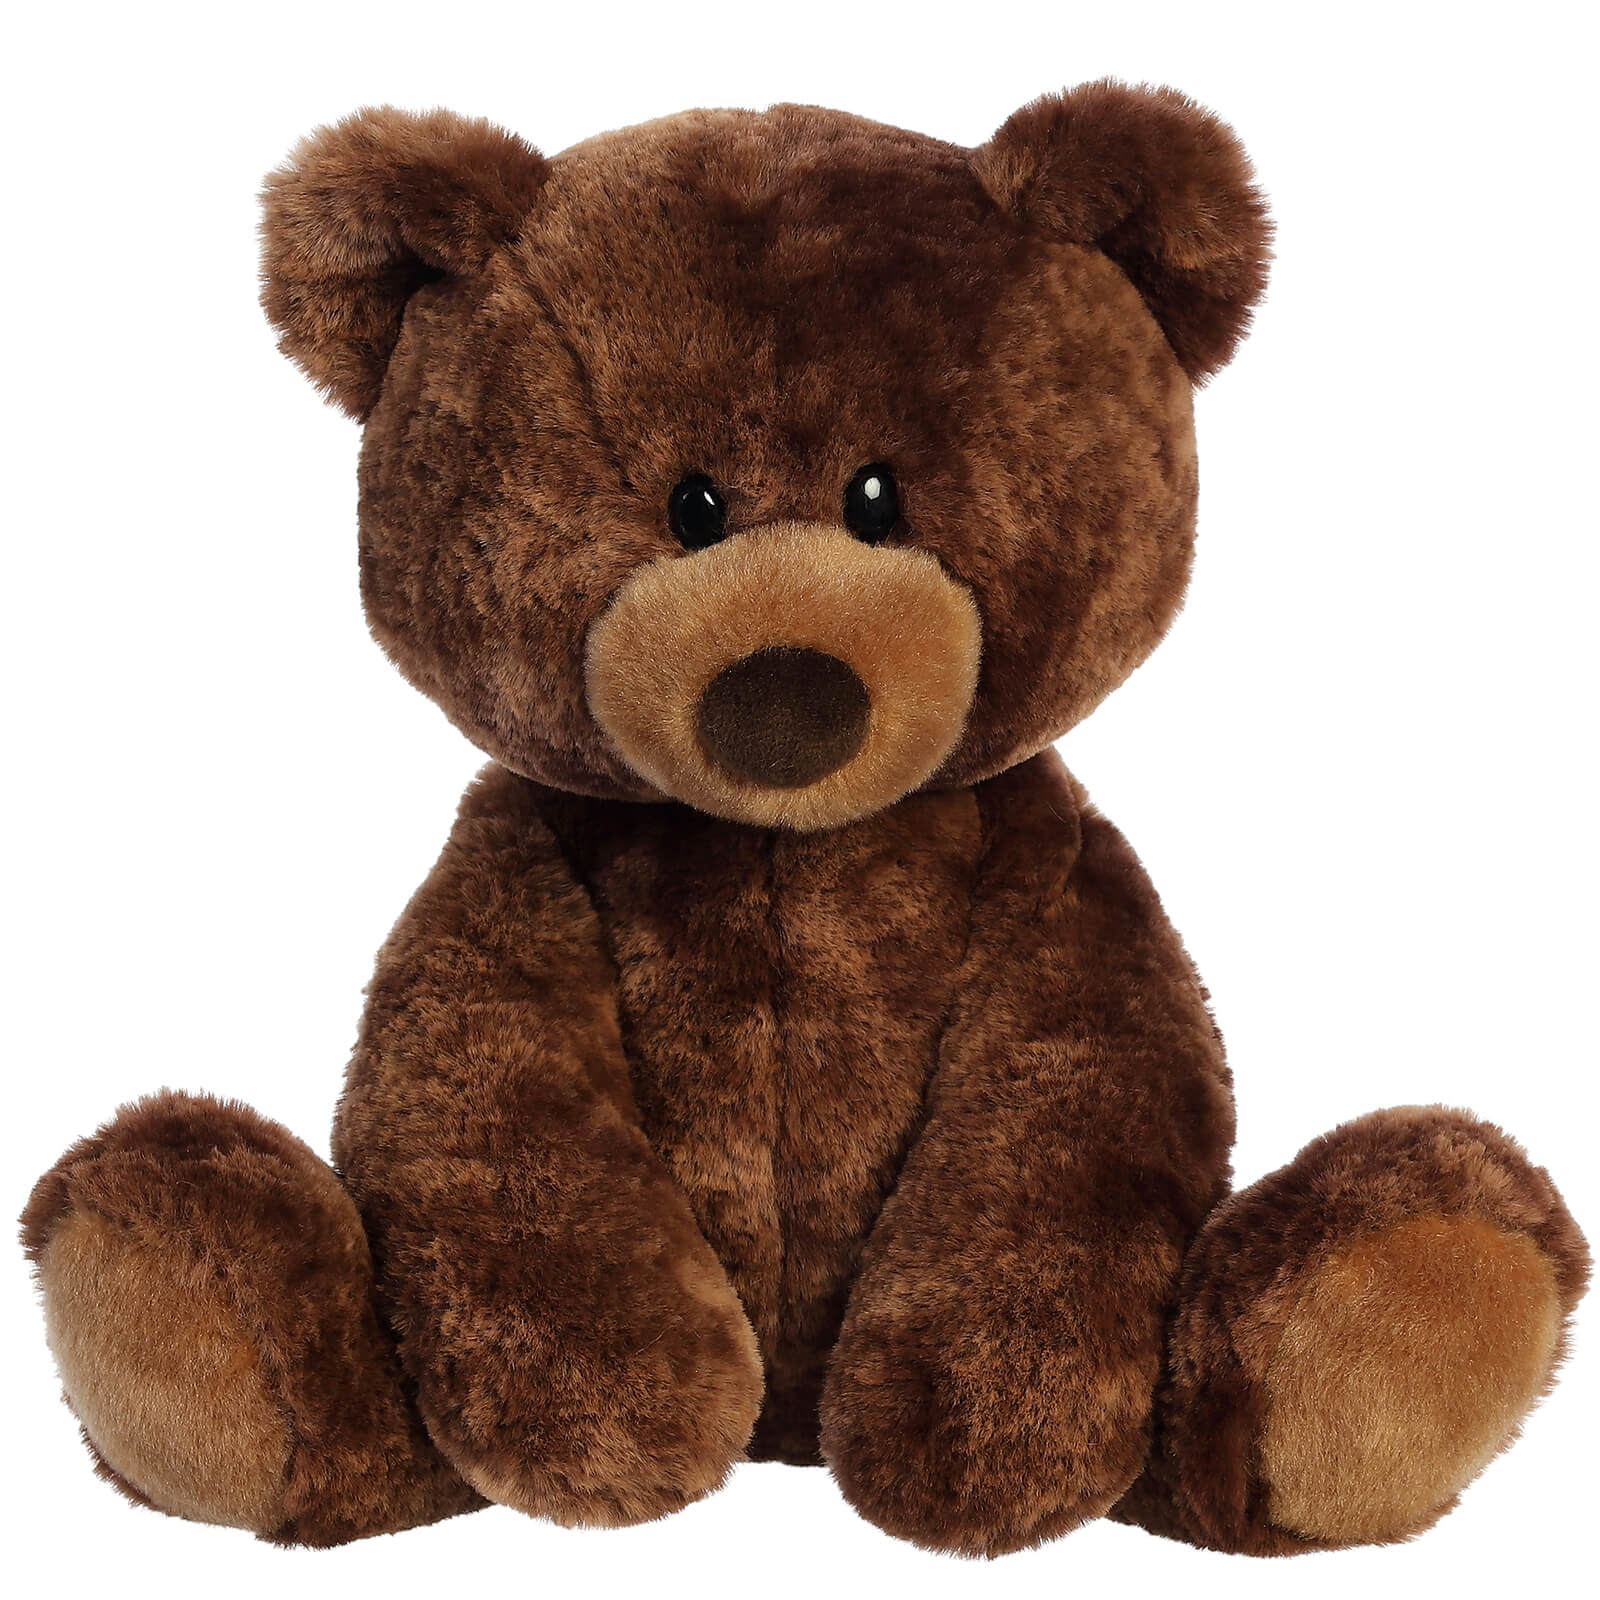 TheMogan Cute Teddy Bear Super Soft Plush Stuffed Animal Toy (Baby to Adult)